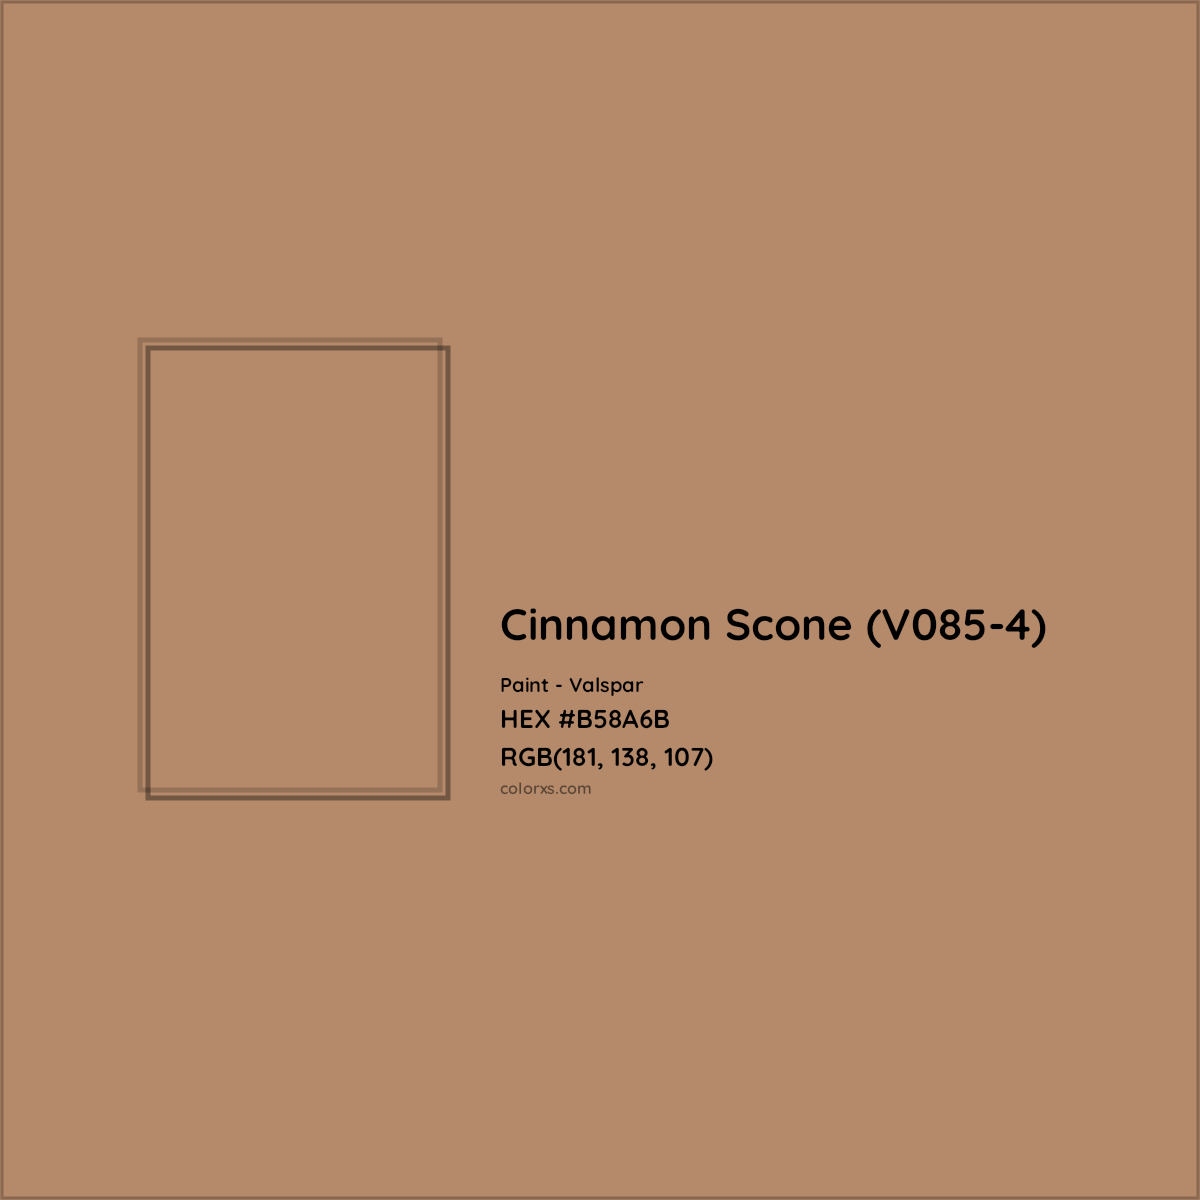 HEX #B58A6B Cinnamon Scone (V085-4) Paint Valspar - Color Code